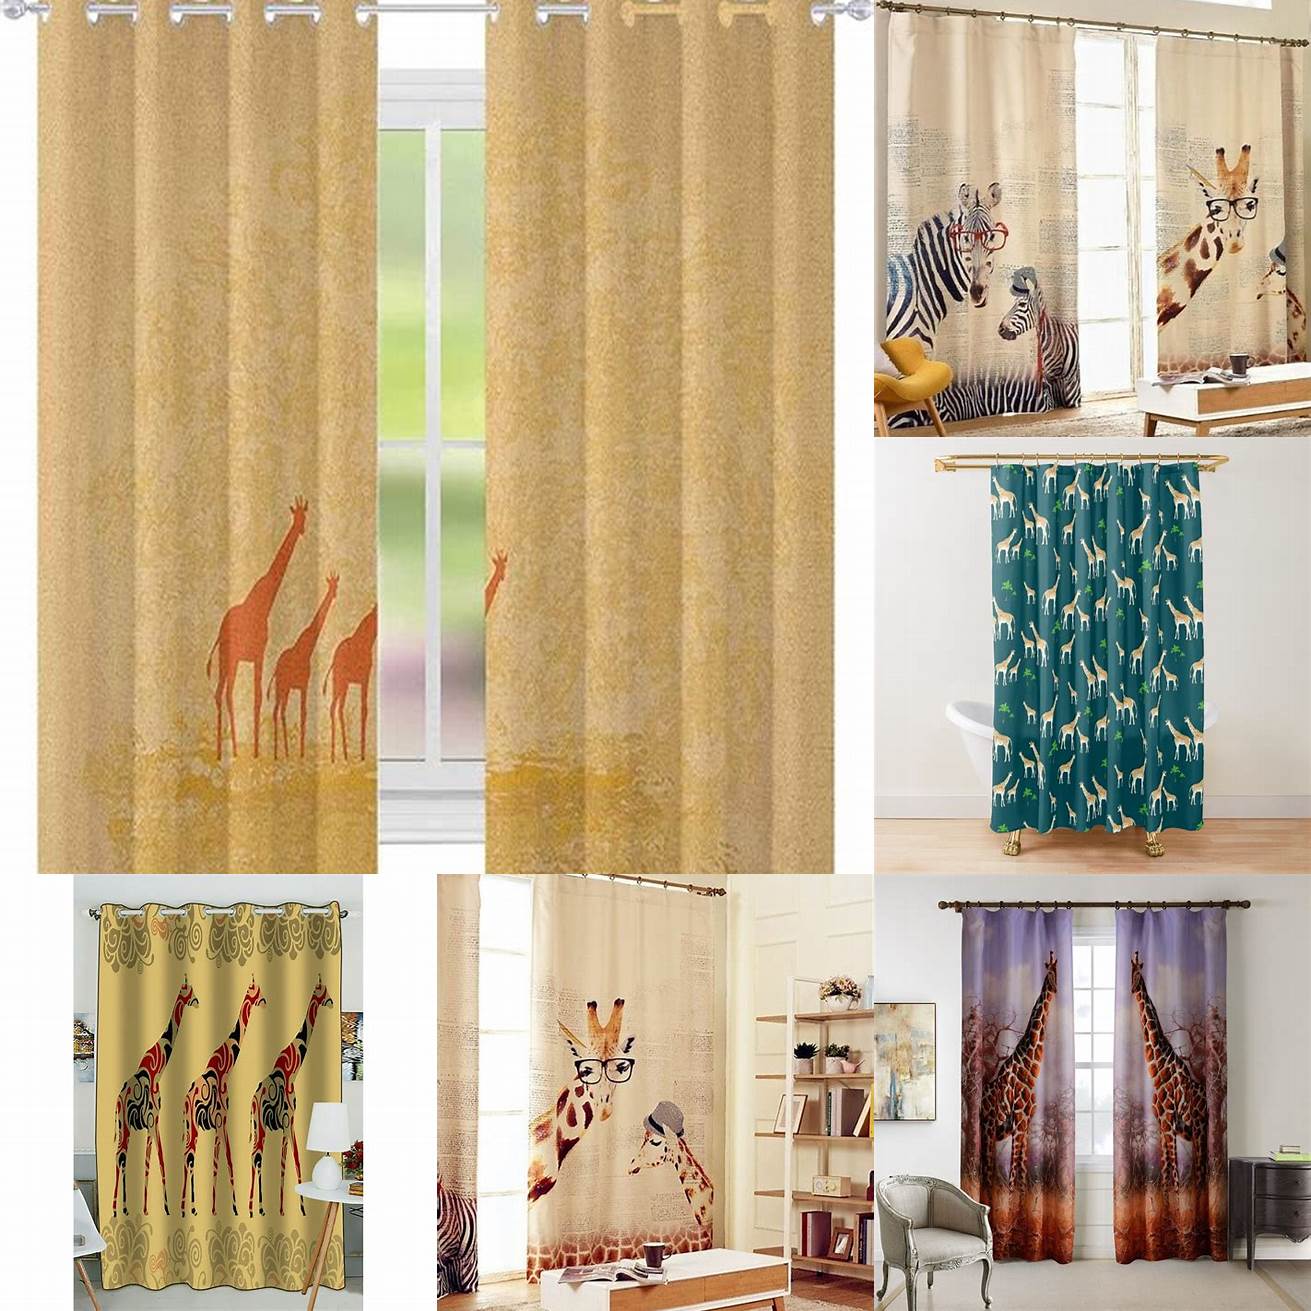 Giraffe Patterned Curtains